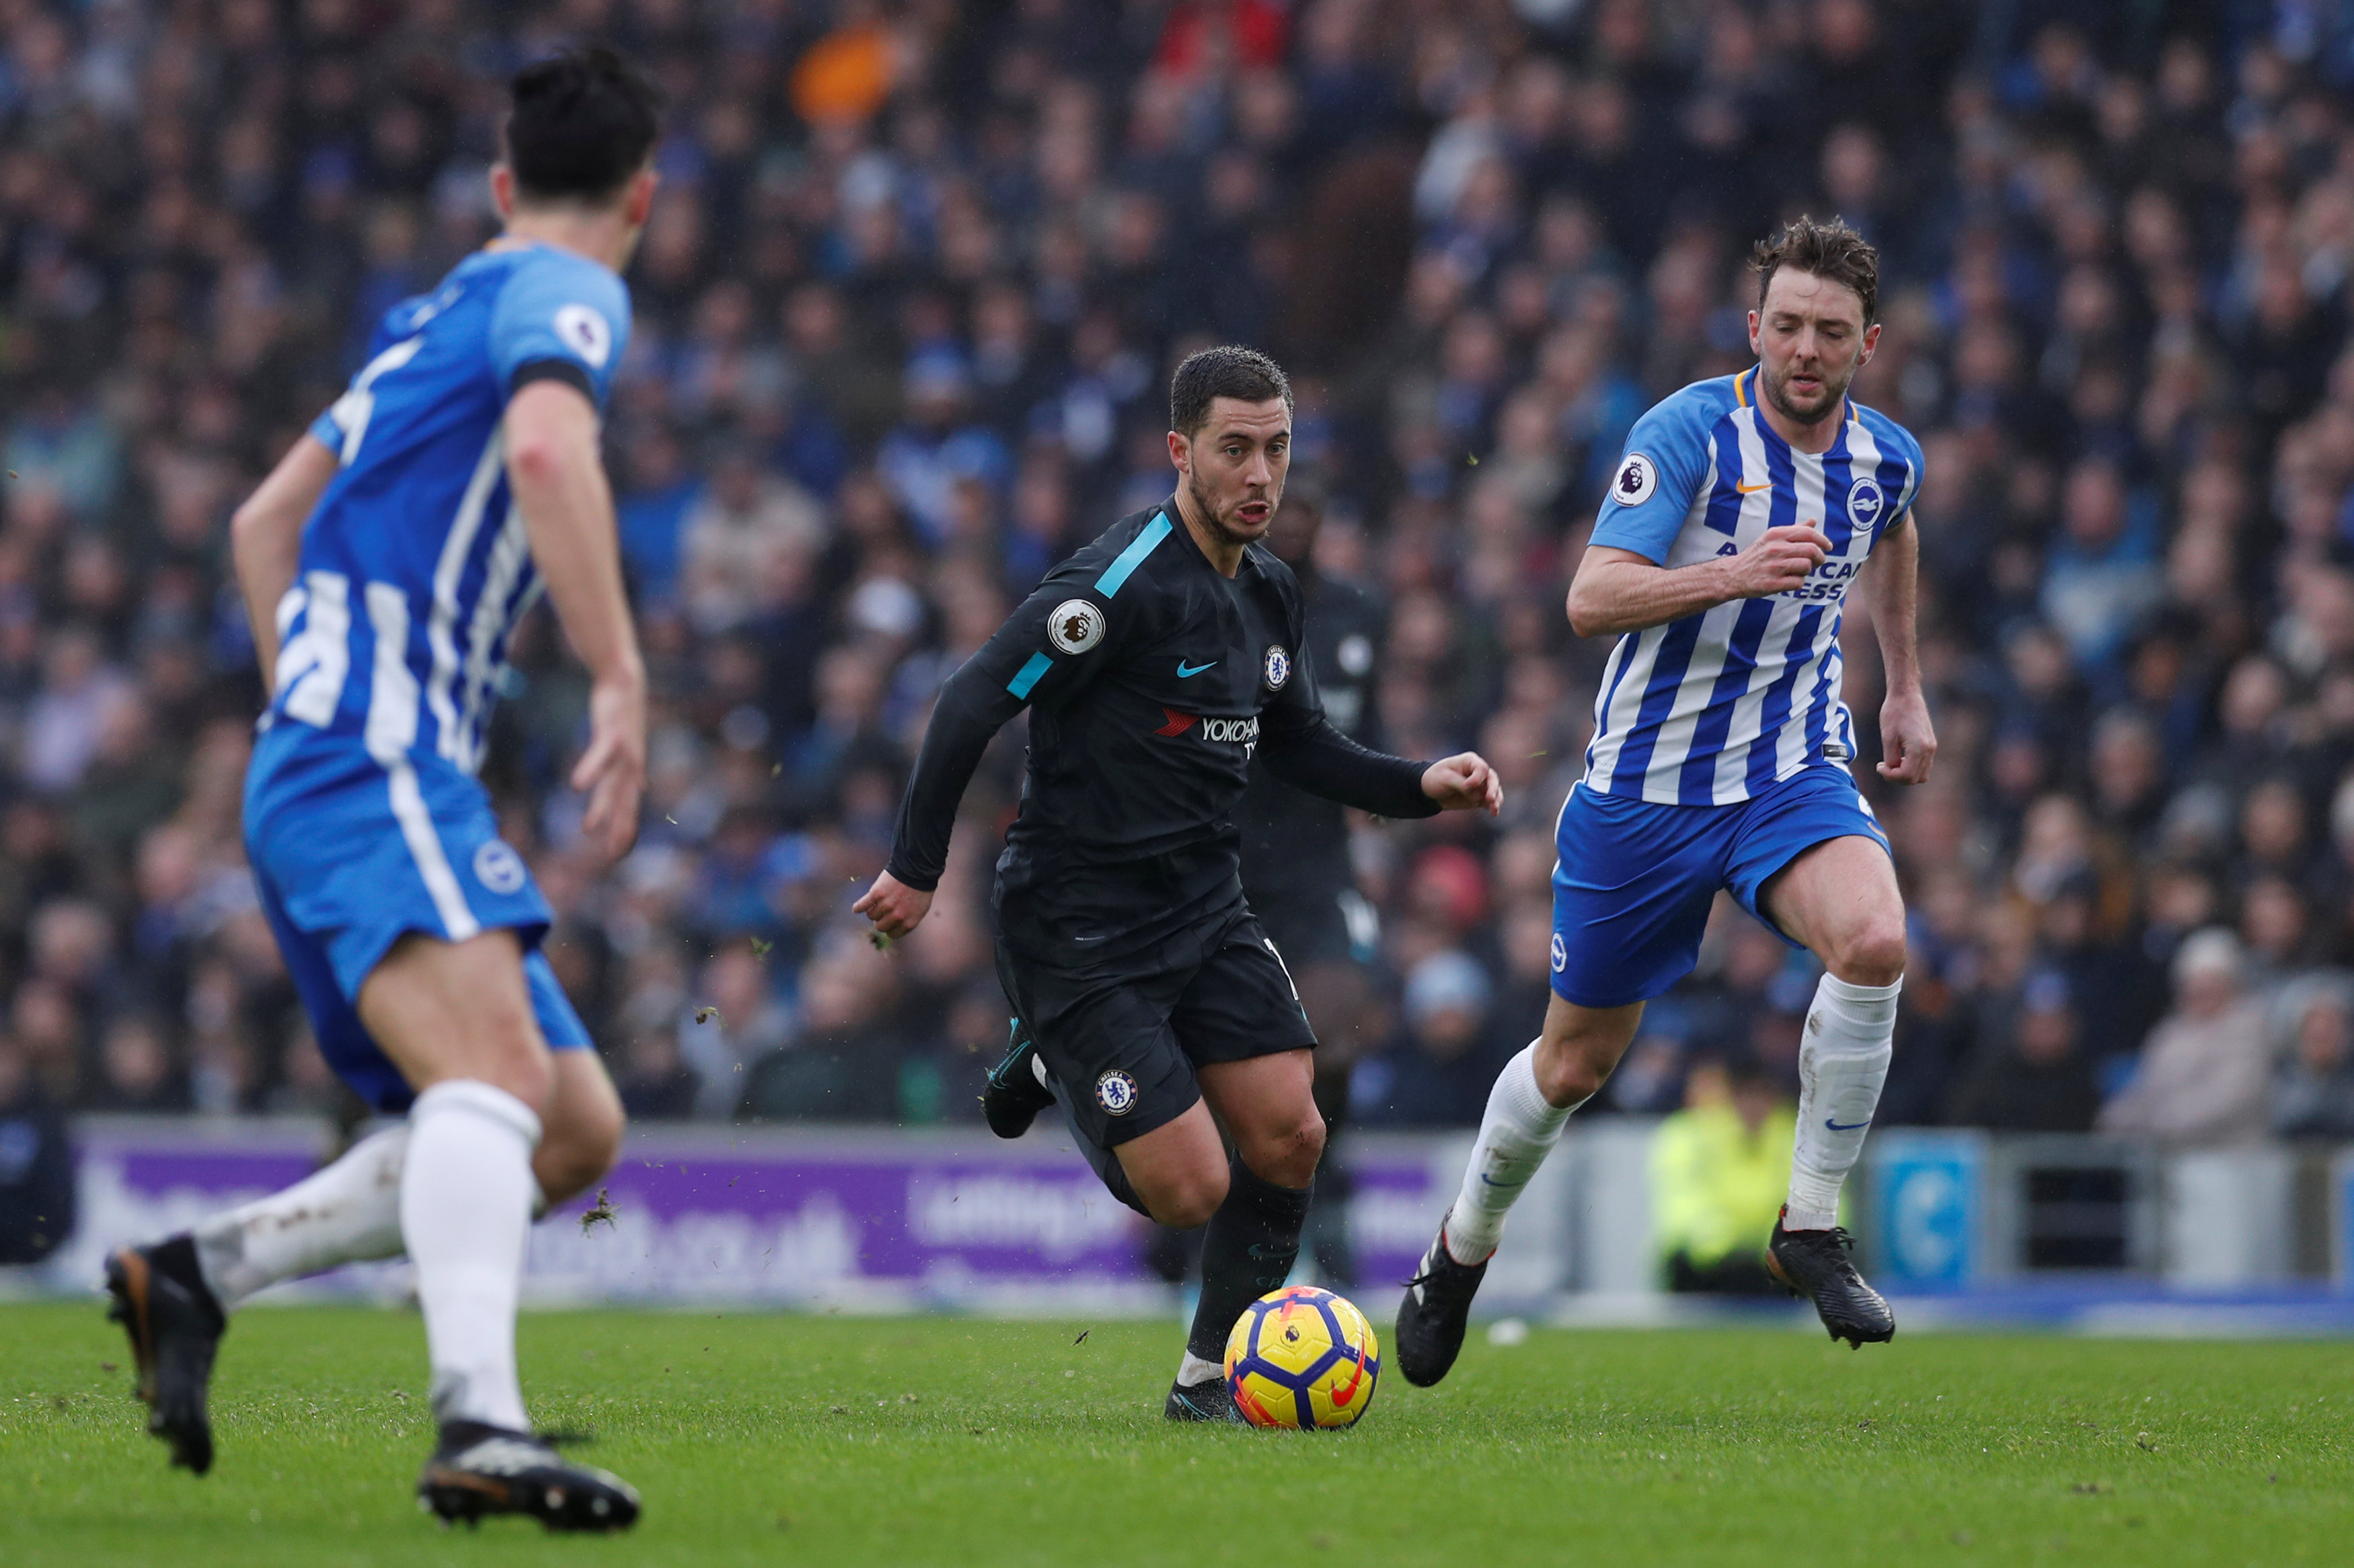 Football: Hazard nets double as Chelsea rout Brighton